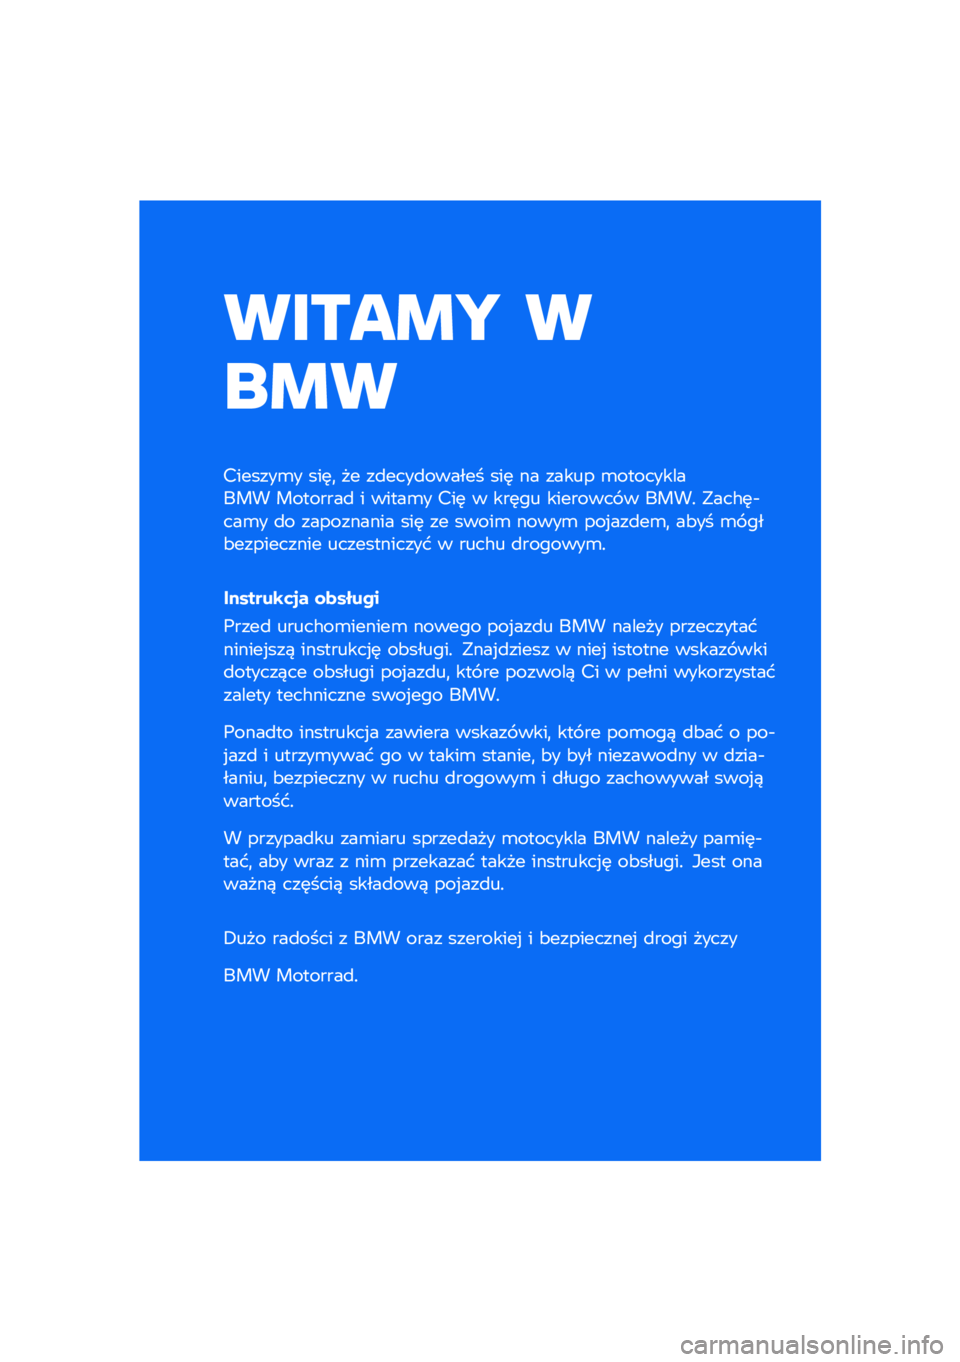 BMW MOTORRAD F 750 GS 2020  Instrukcja obsługi (in Polish) ������ �
�\b��
�������\b� ���	�
 �� ��
����
������ ���	 �� ����� �\b����������� ��������
 � �����\b� ���	 � ���	�� ��������